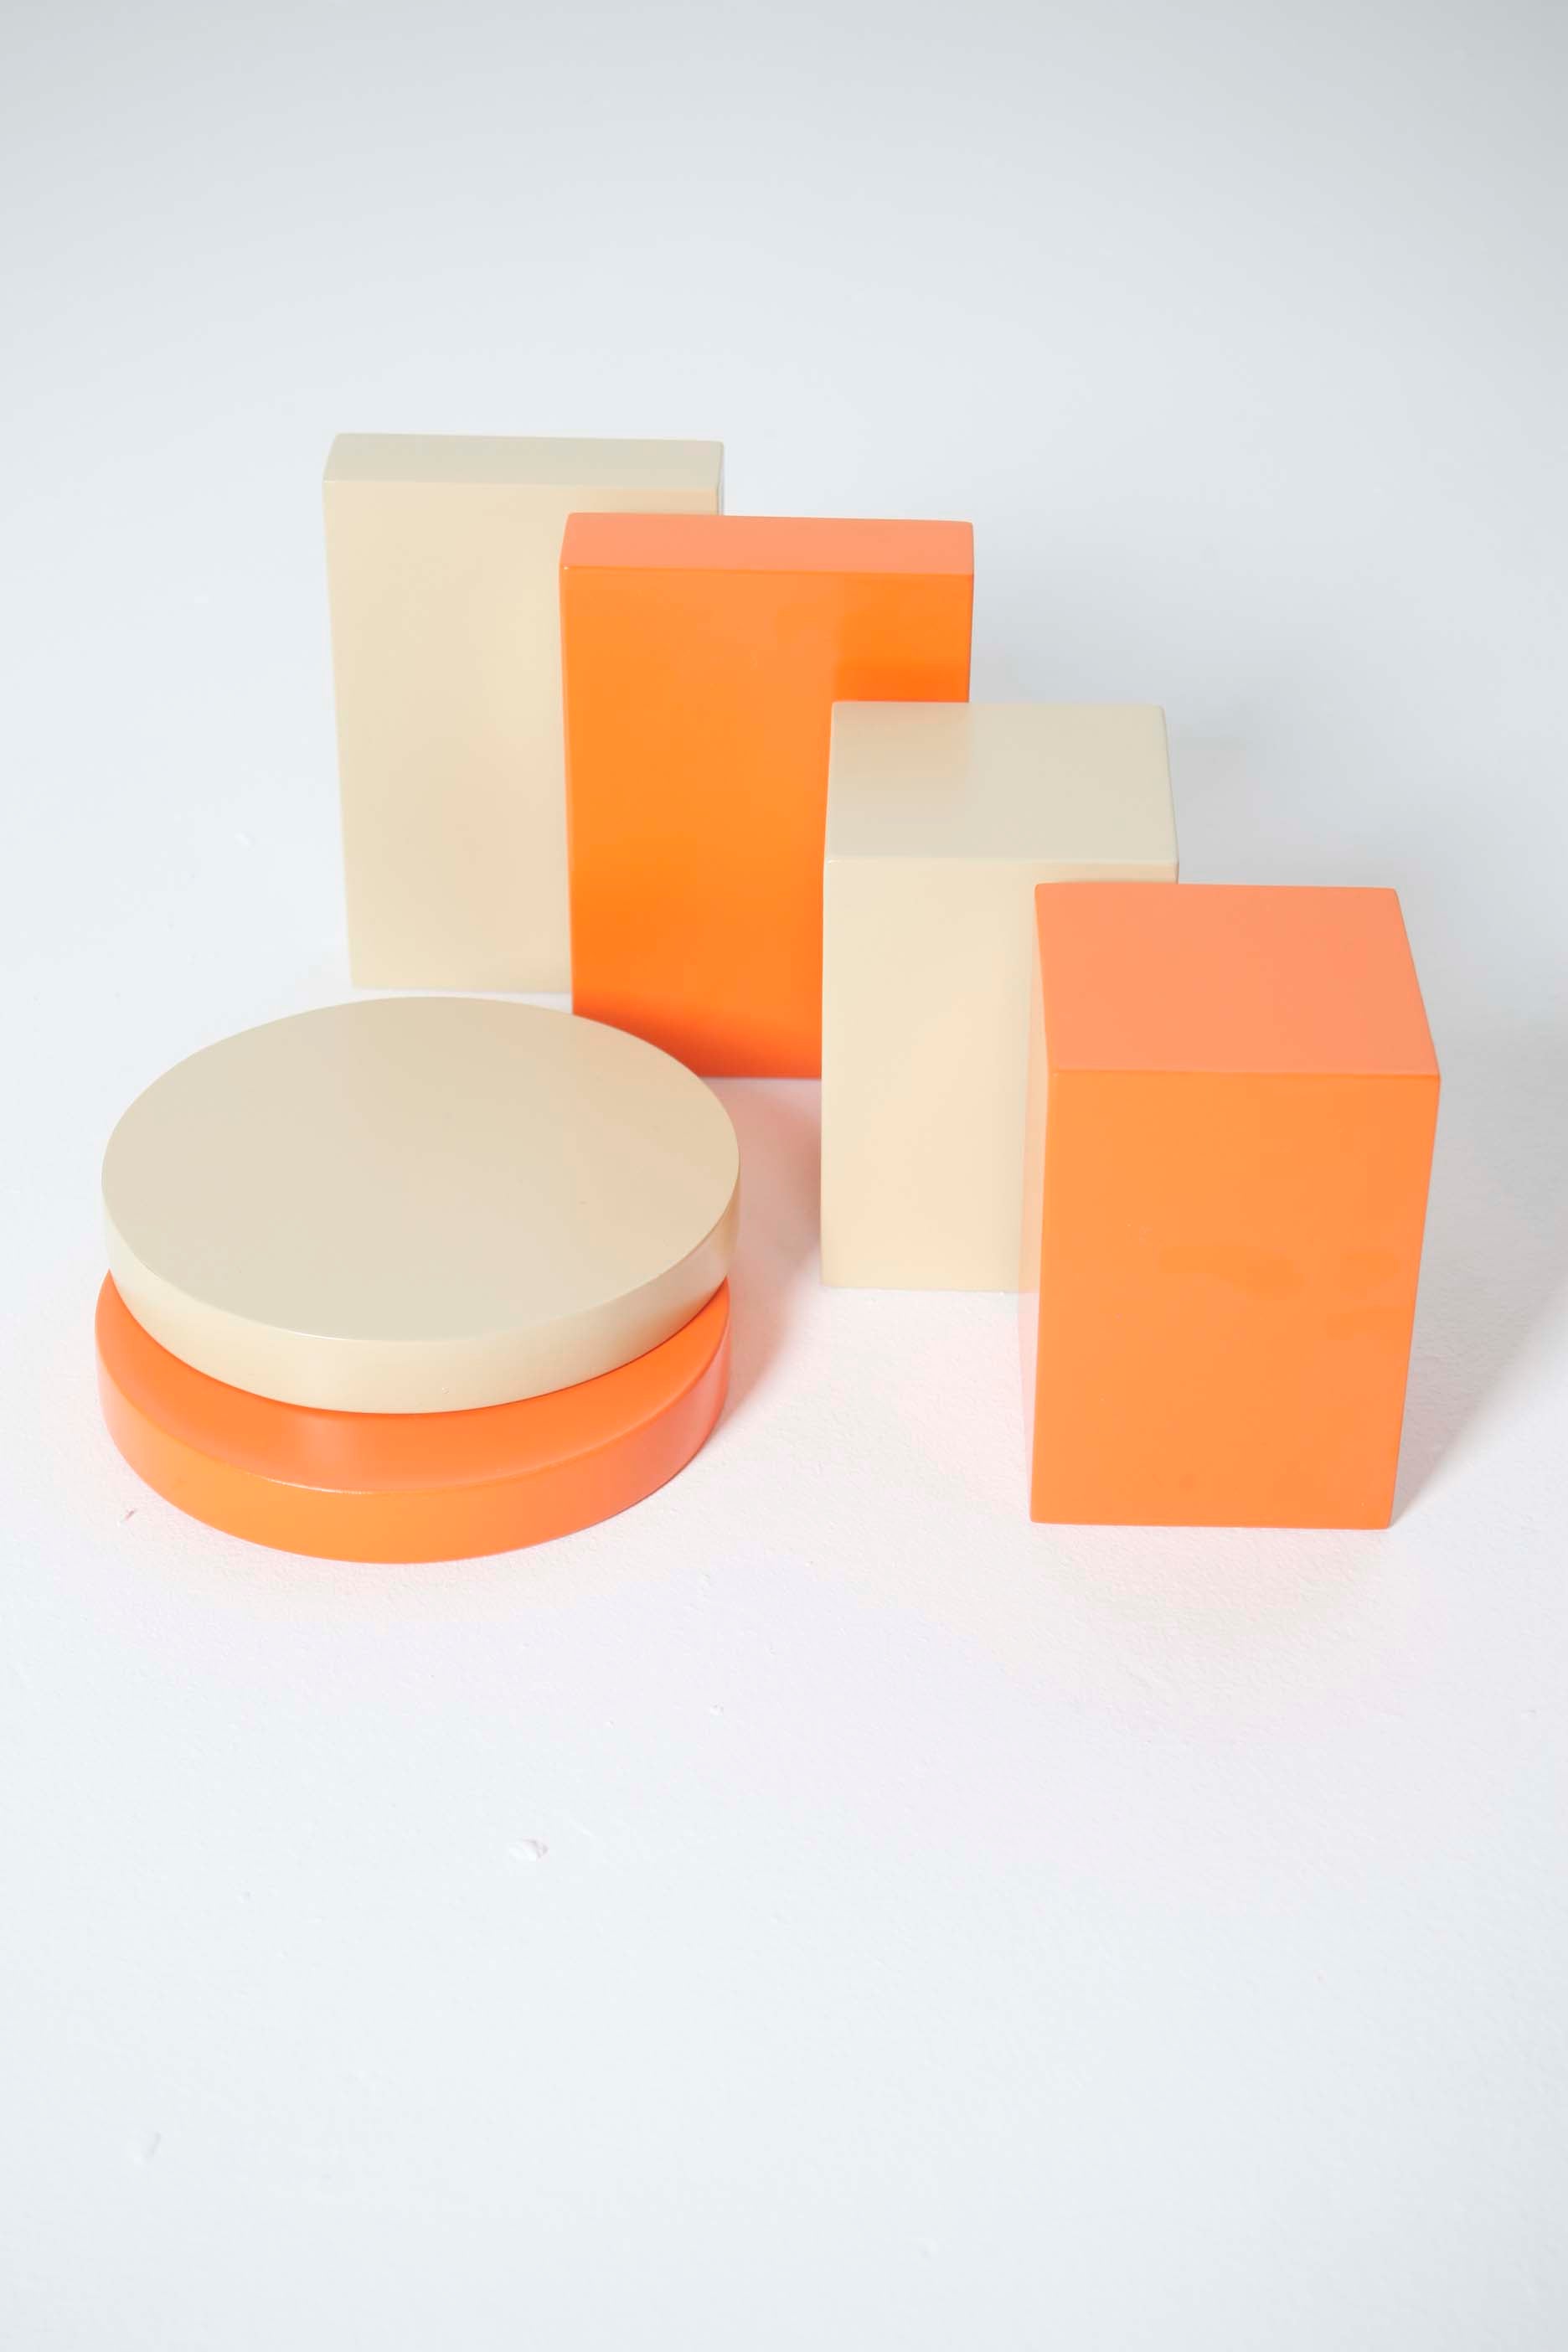 Bundle of Small Block and Cylinder Plinths in Orange / Beige